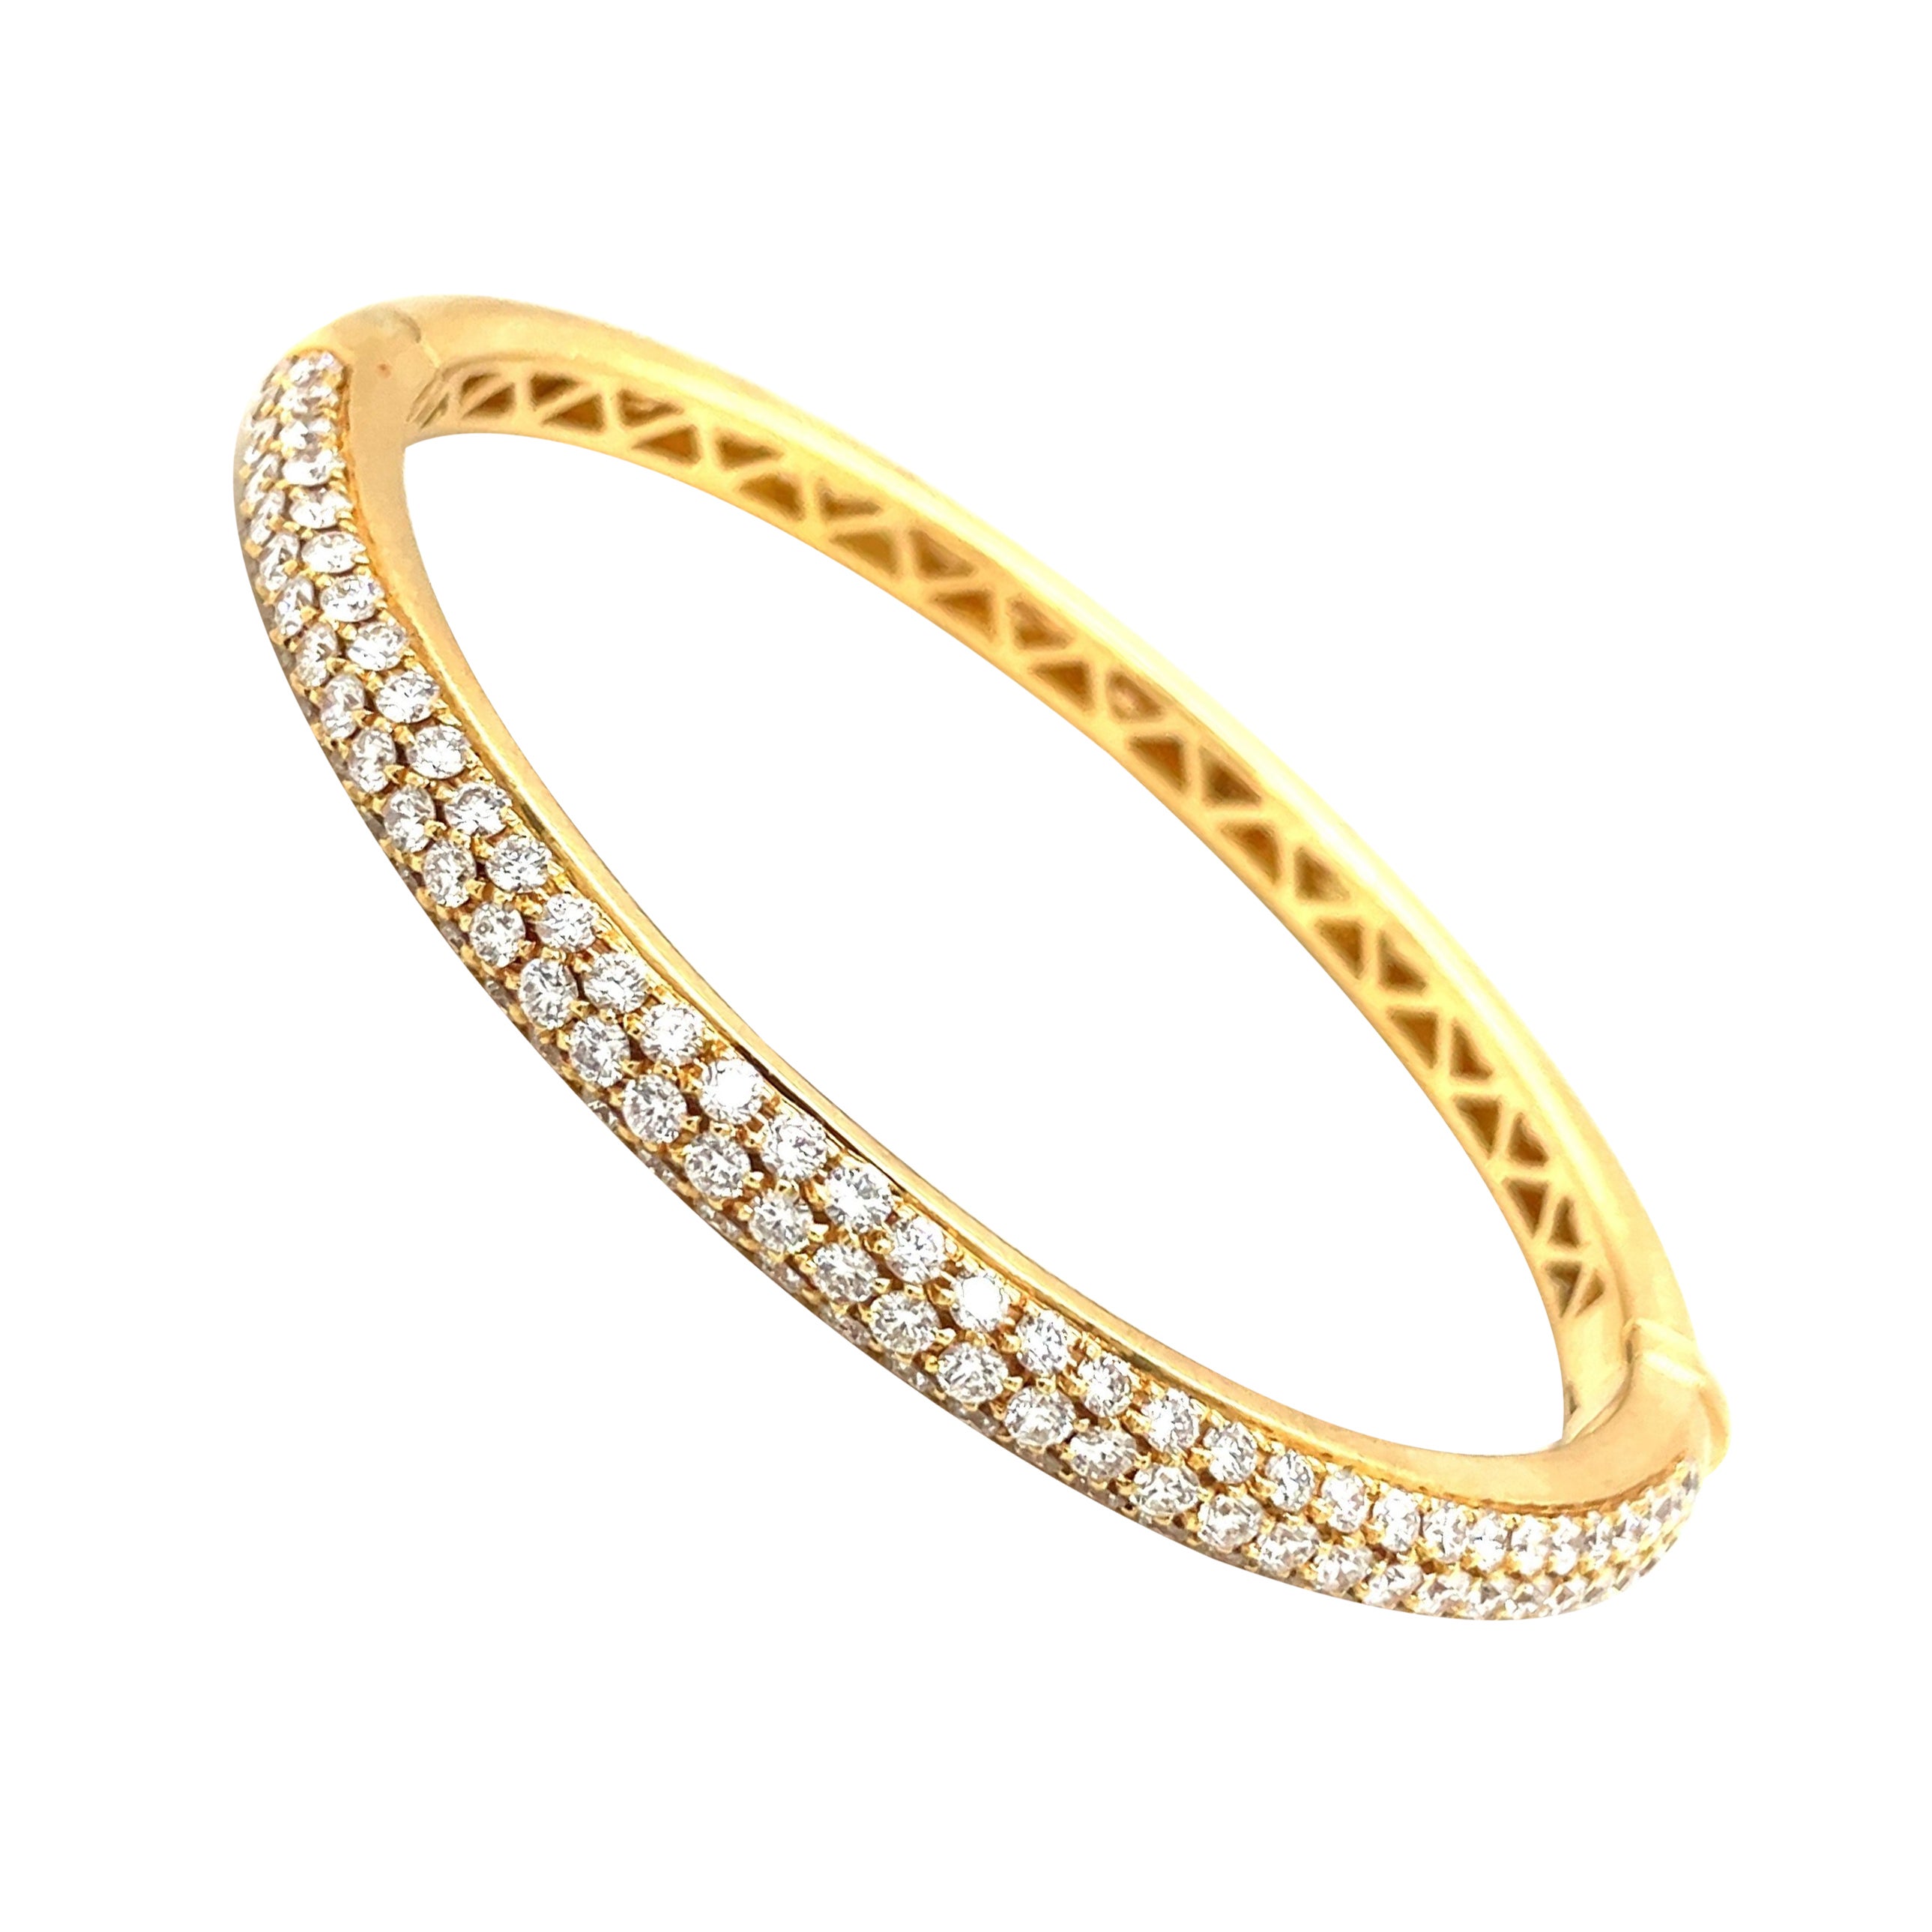 Garavelli 18Kt Yellow Gold 3.90Ct Pave' Diamond Bangle Bracelet